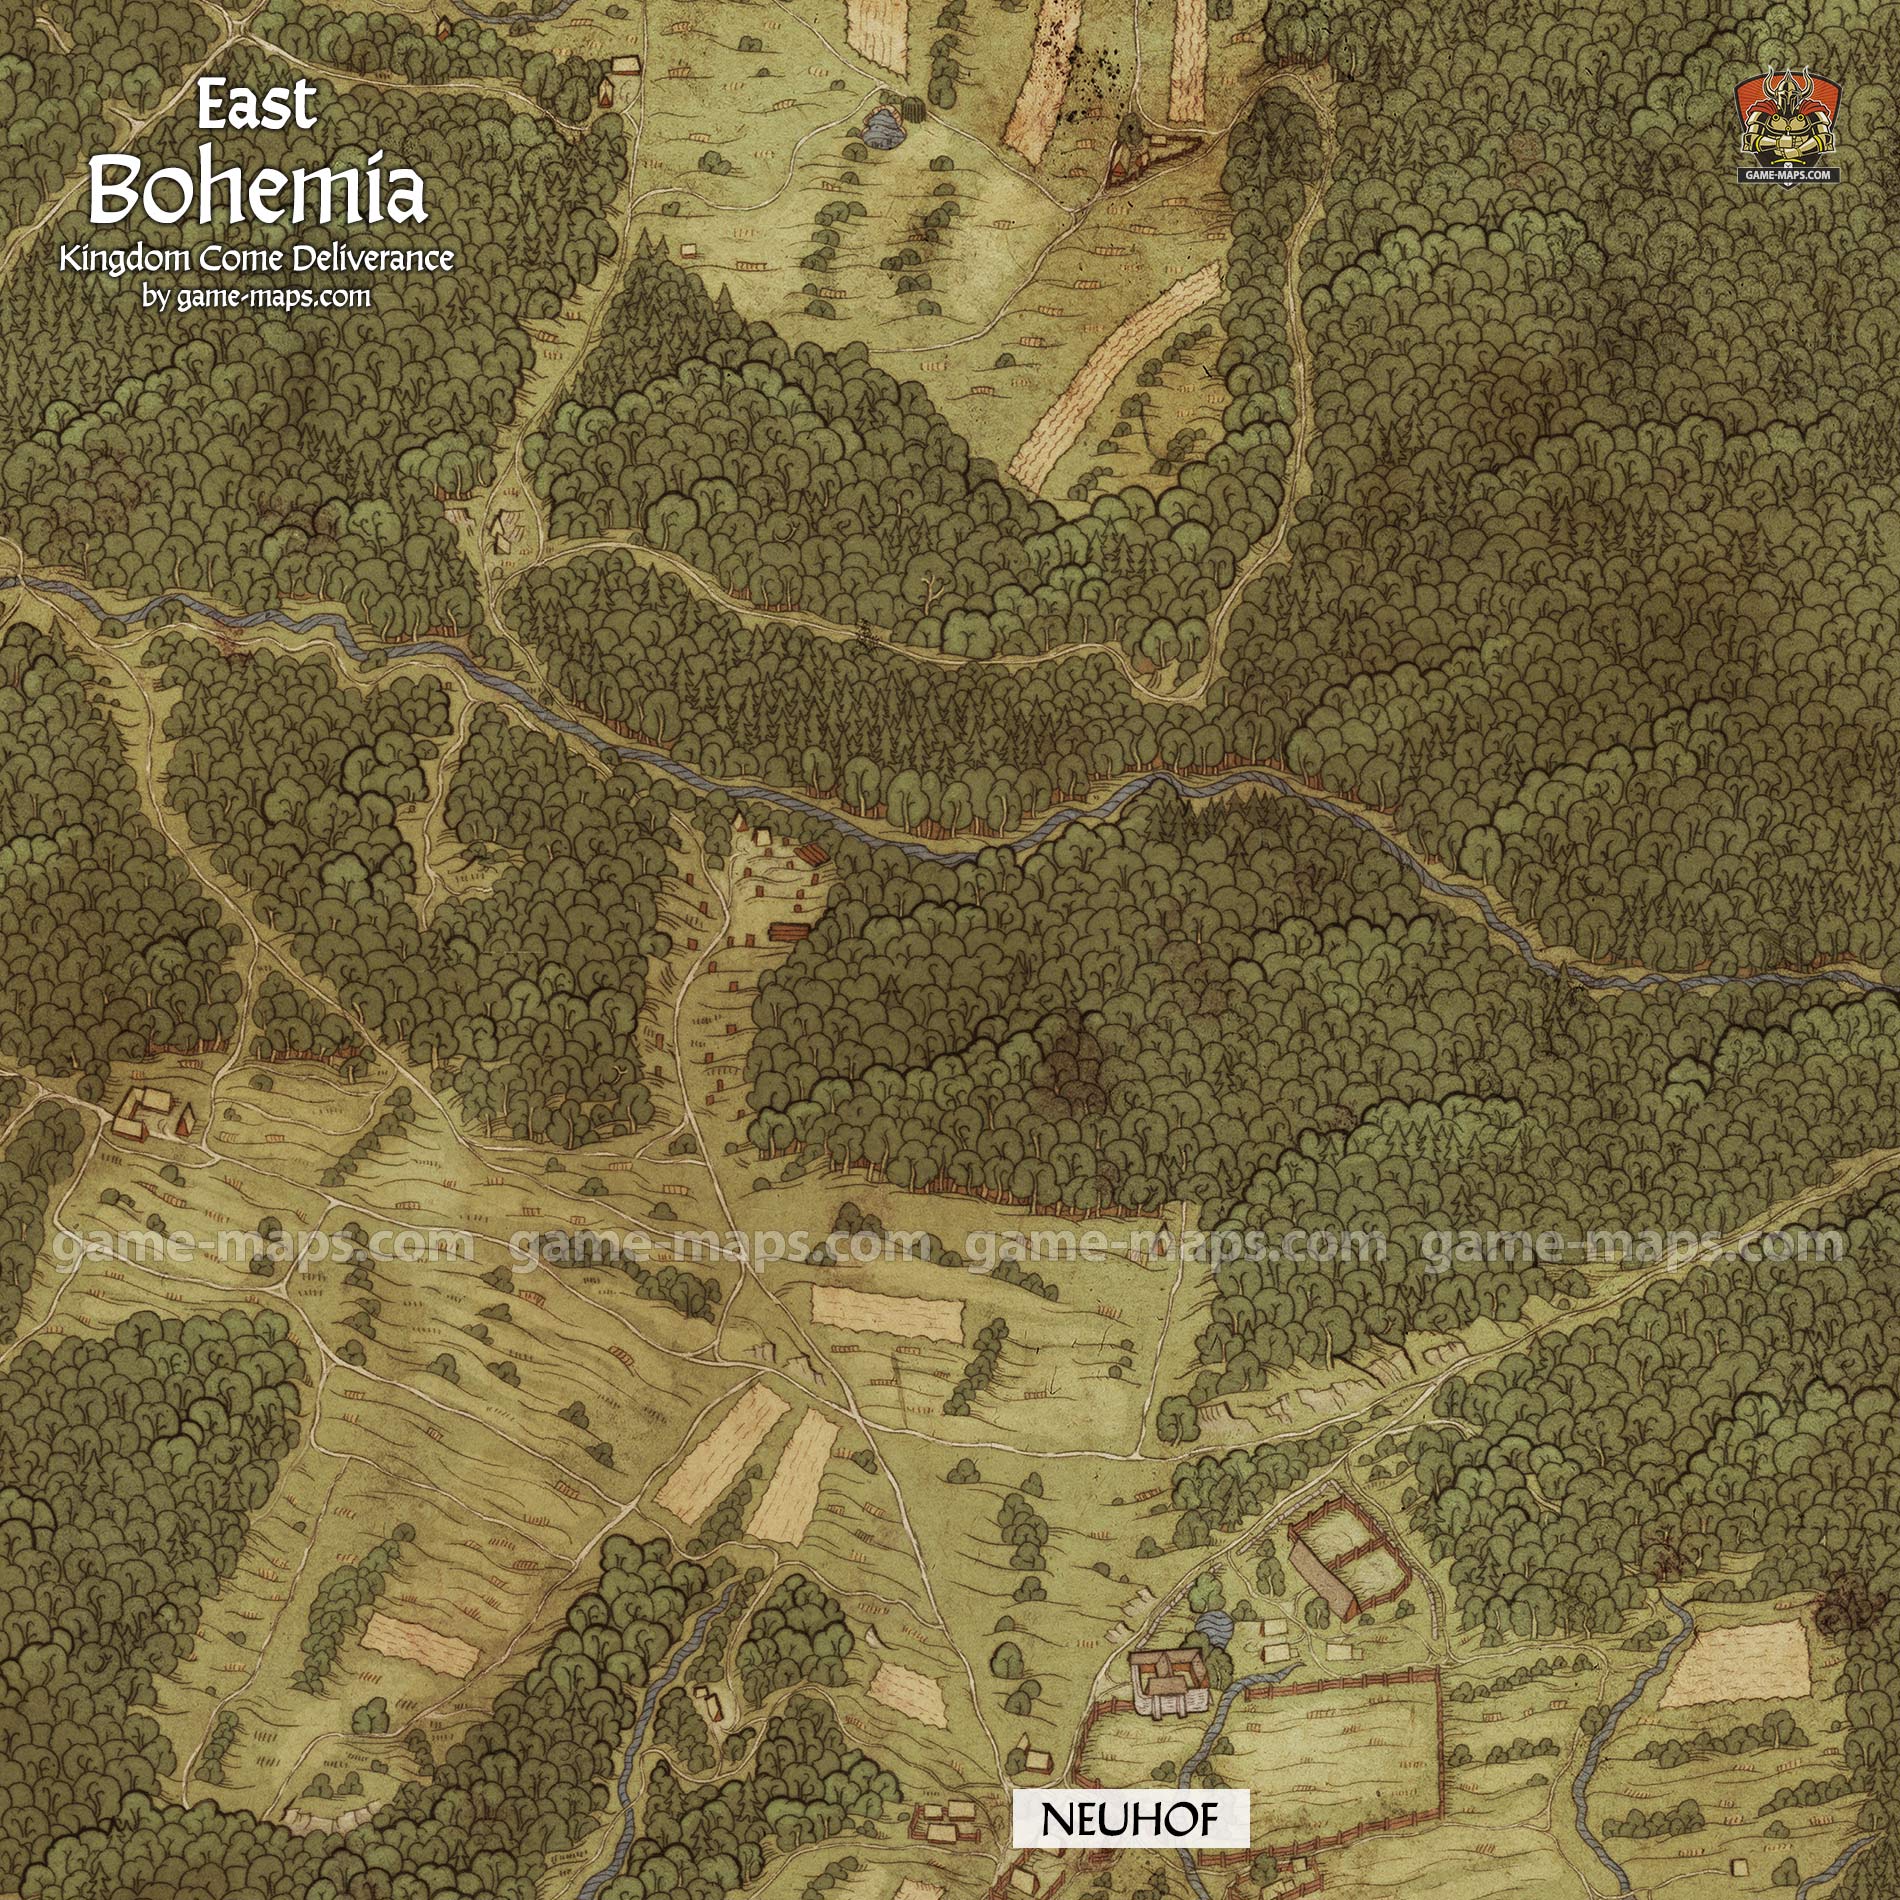 East Bohemia Map for Kingdom Come Deliverance